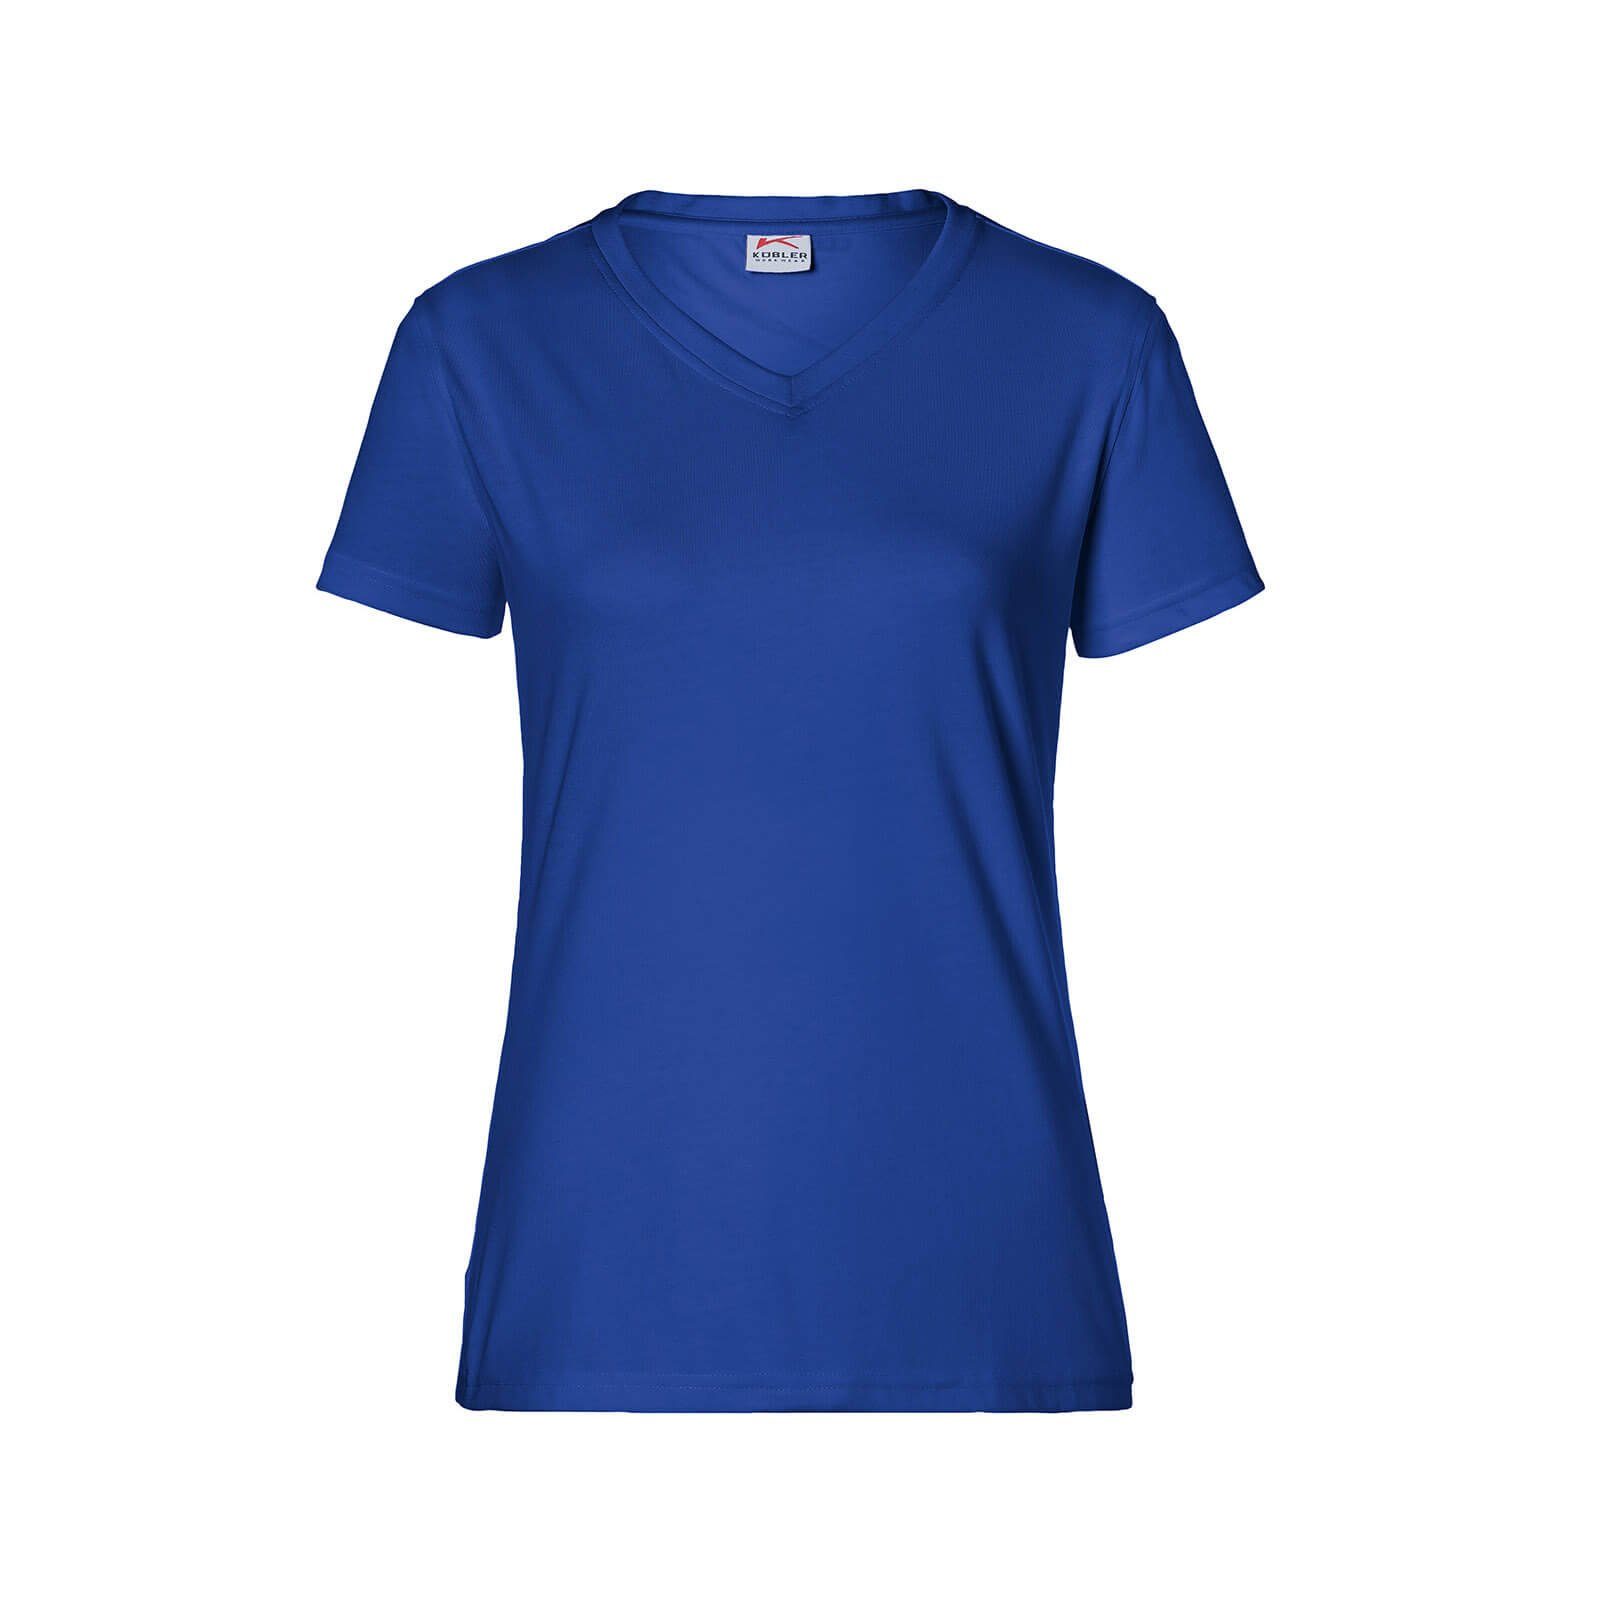 kbl.blau Kübler T-Shirt T-Shirt Shirts Kübler Damen